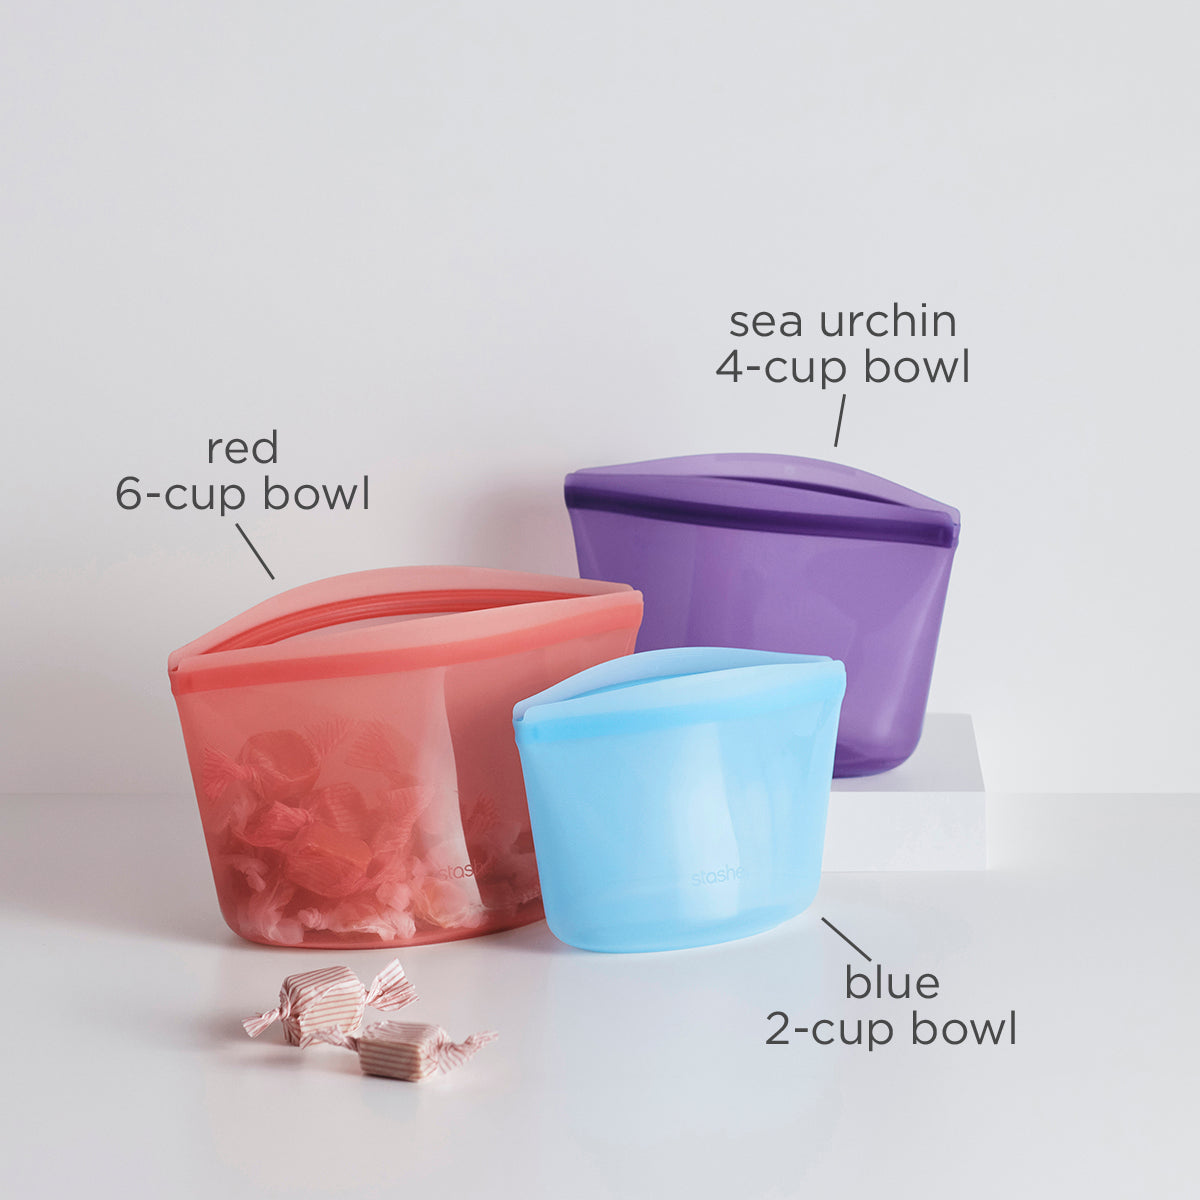 The Silicone Kitchen Reusable Silicone Baking Cups - Matte Black, Non-Toxic, BPA Free, Dishwasher Safe (12 Pack, Regular)